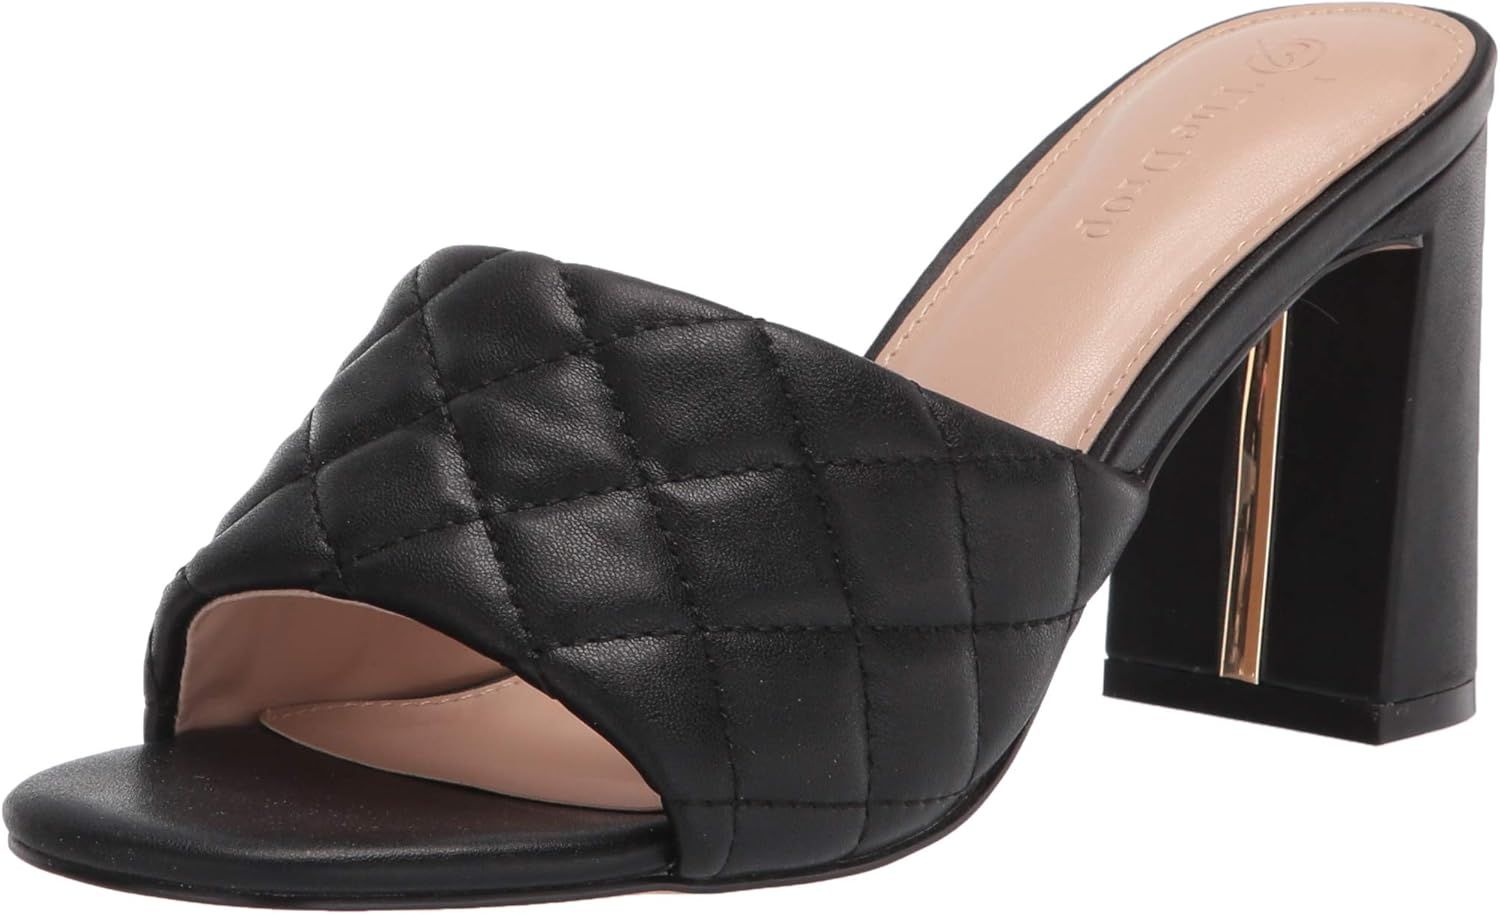 Amazon Brand - Women's Pattie High Block Heeled Mule Sandal by The Drop | Amazon (UK)